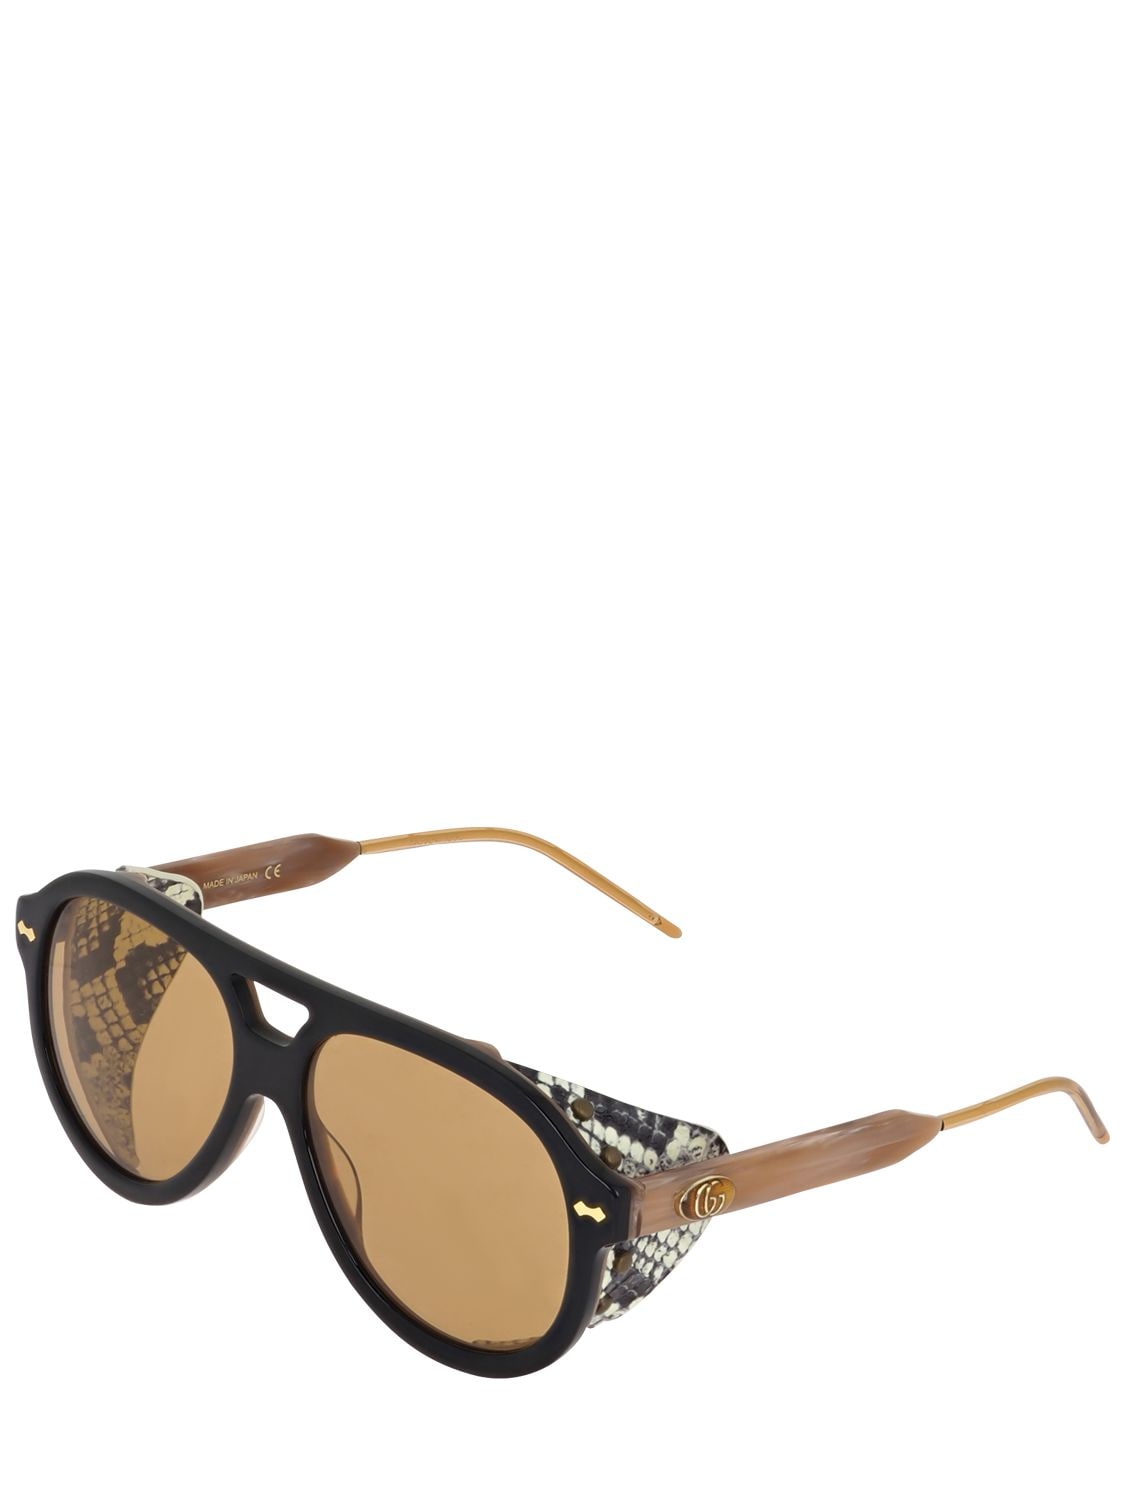 Gucci Bold Mask Sunglasses W/ Snakeskin Detail In Schwarz,multi